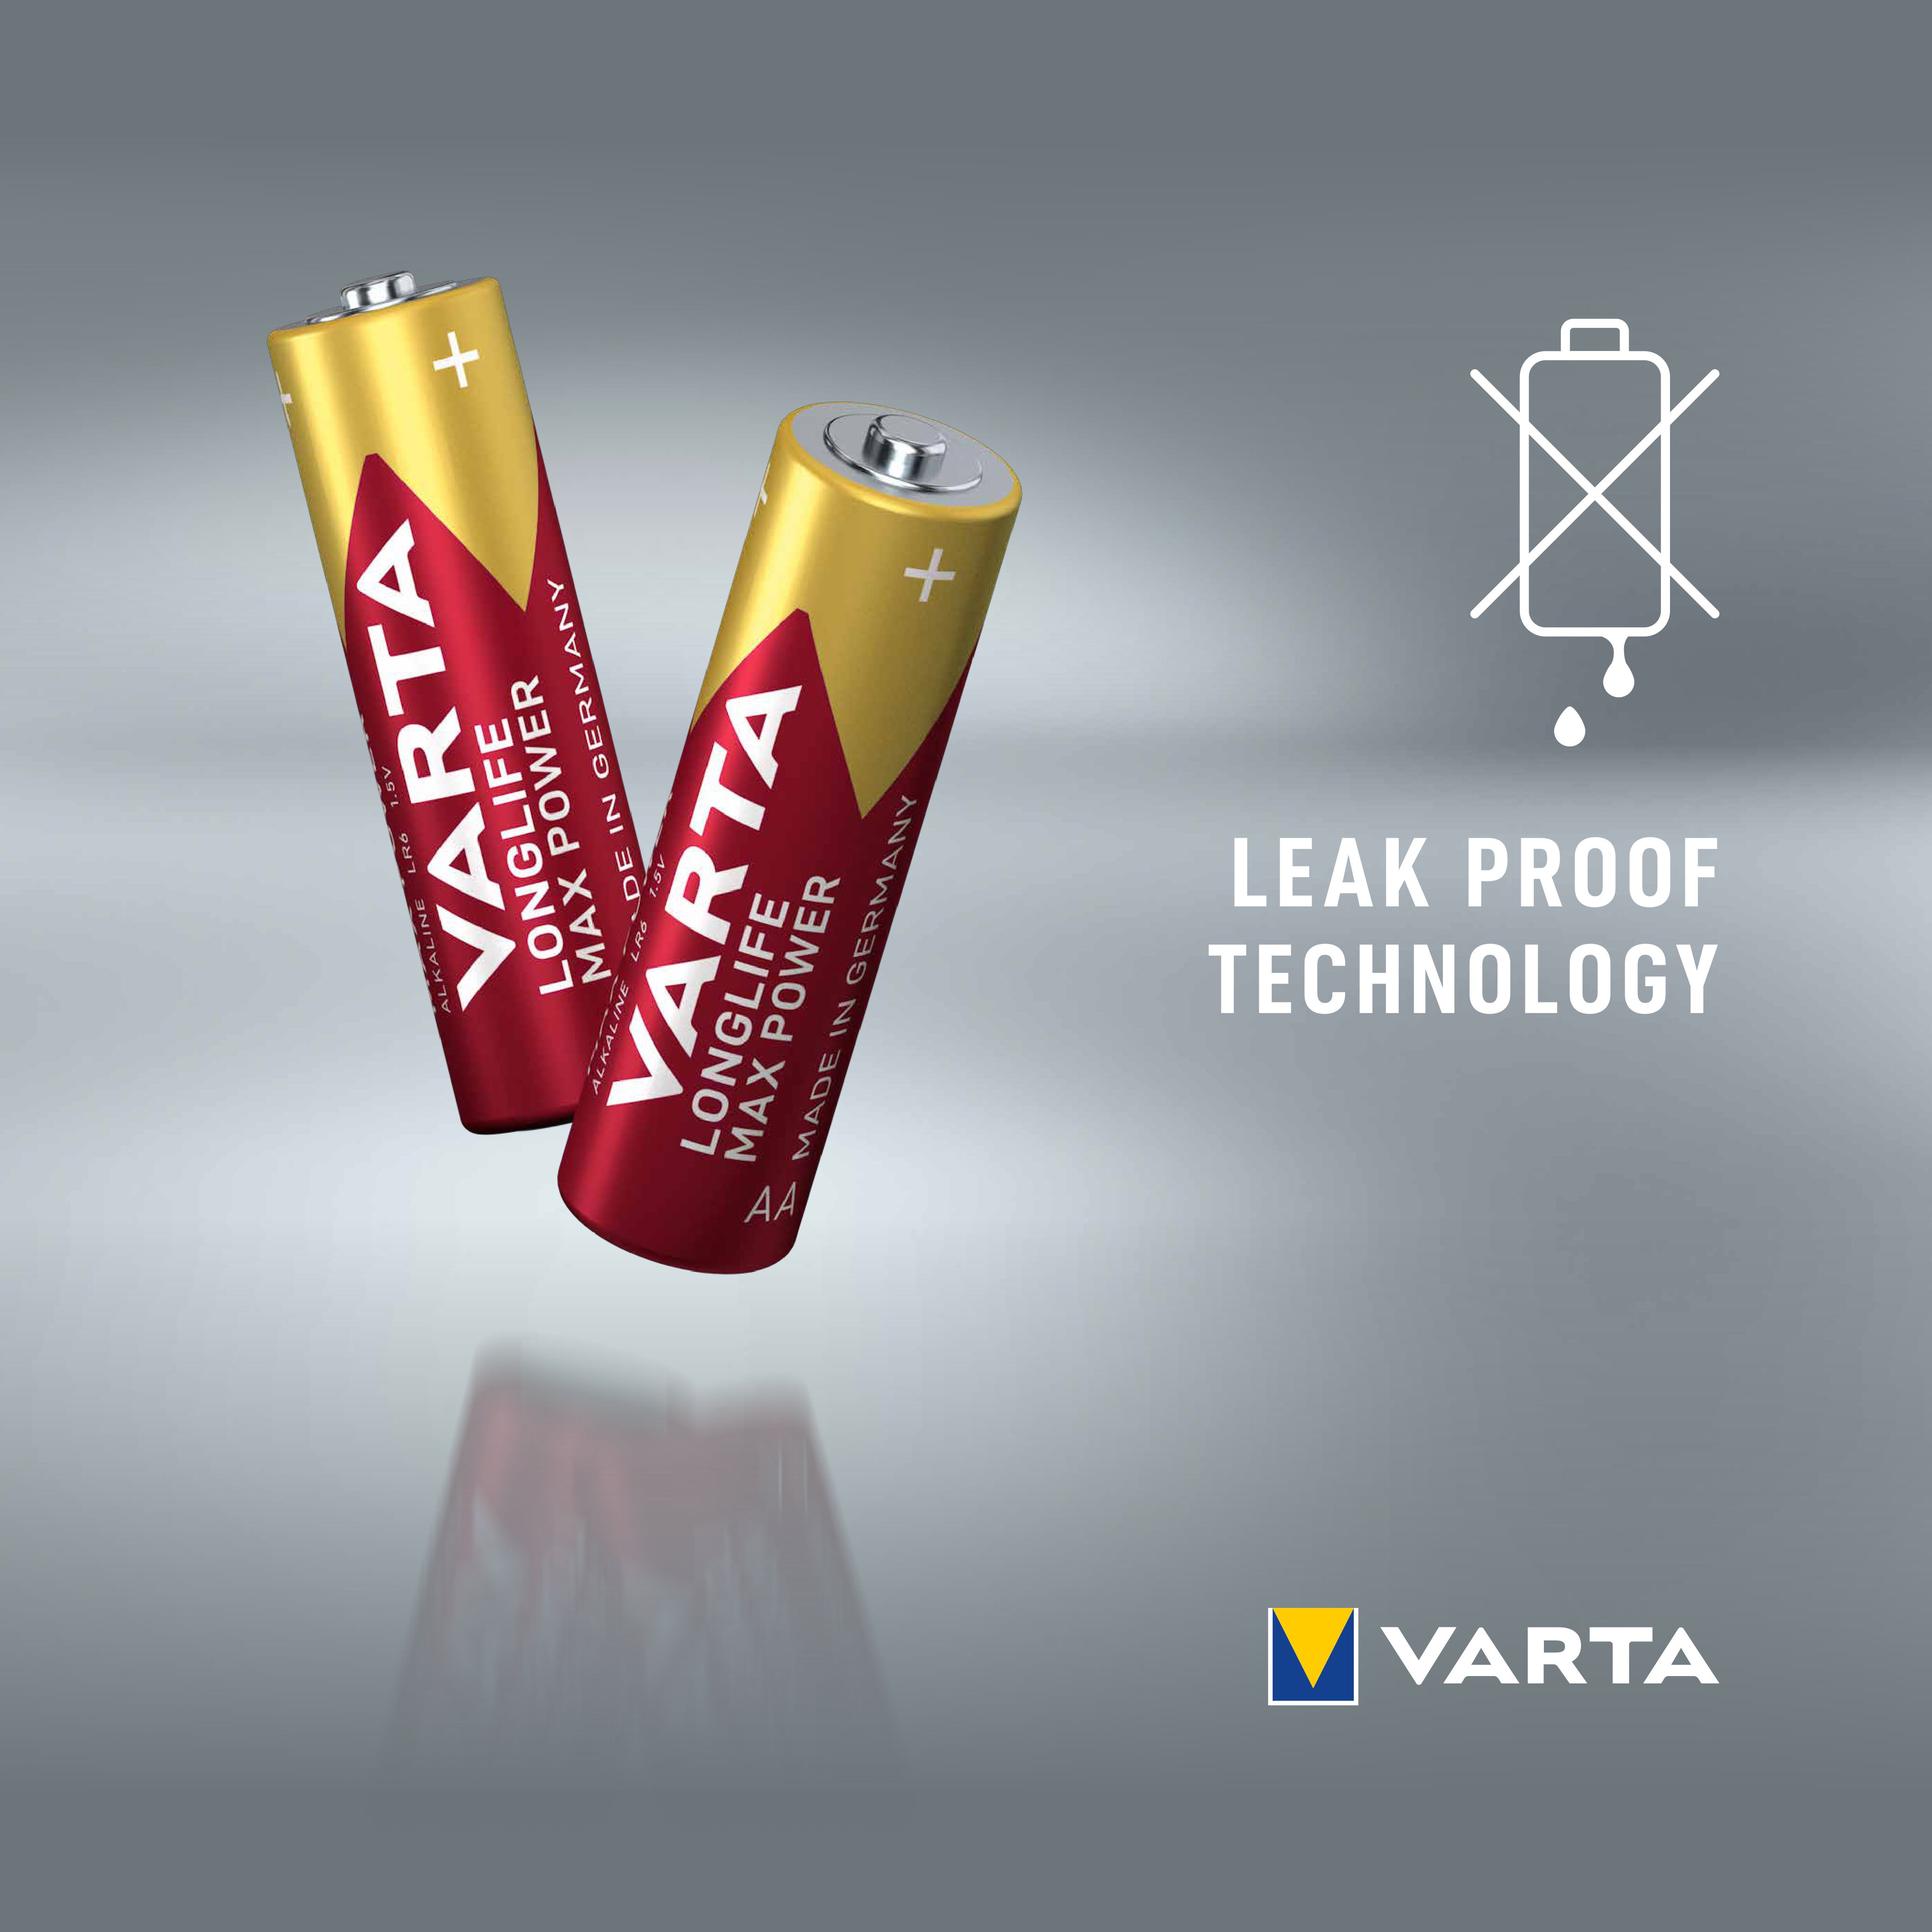 Varta Longlife Max Power 1.5V C Batteries, Pack of 2